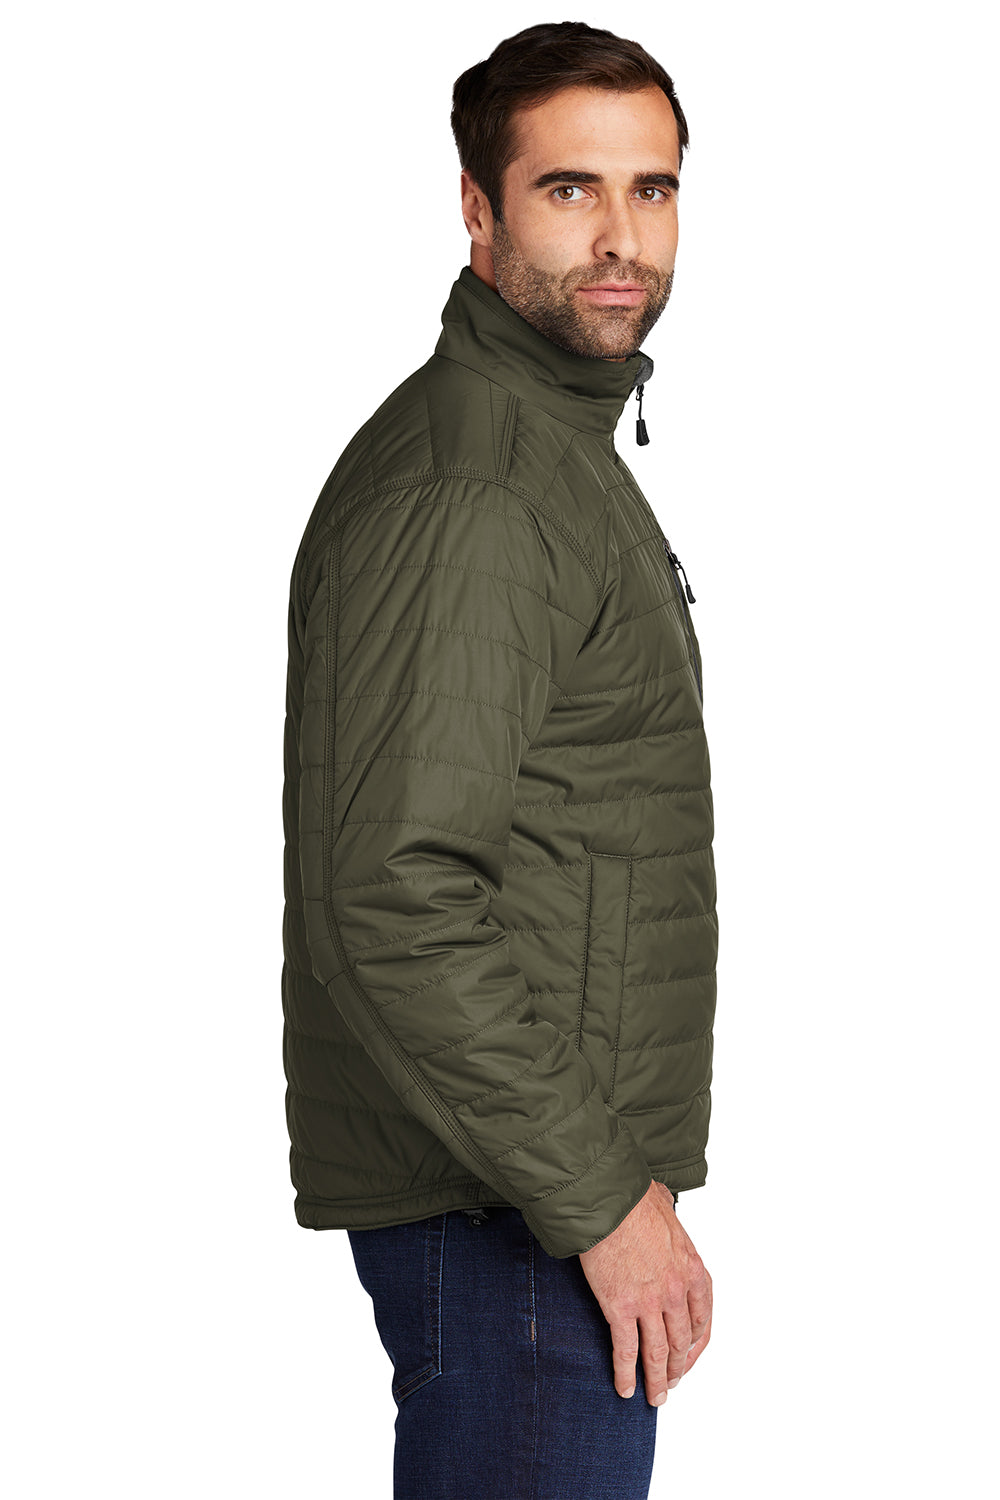 Carhartt CT102208 Mens Gilliam Wind & Water Resistant Full Zip Jacket Moss Green Model Side